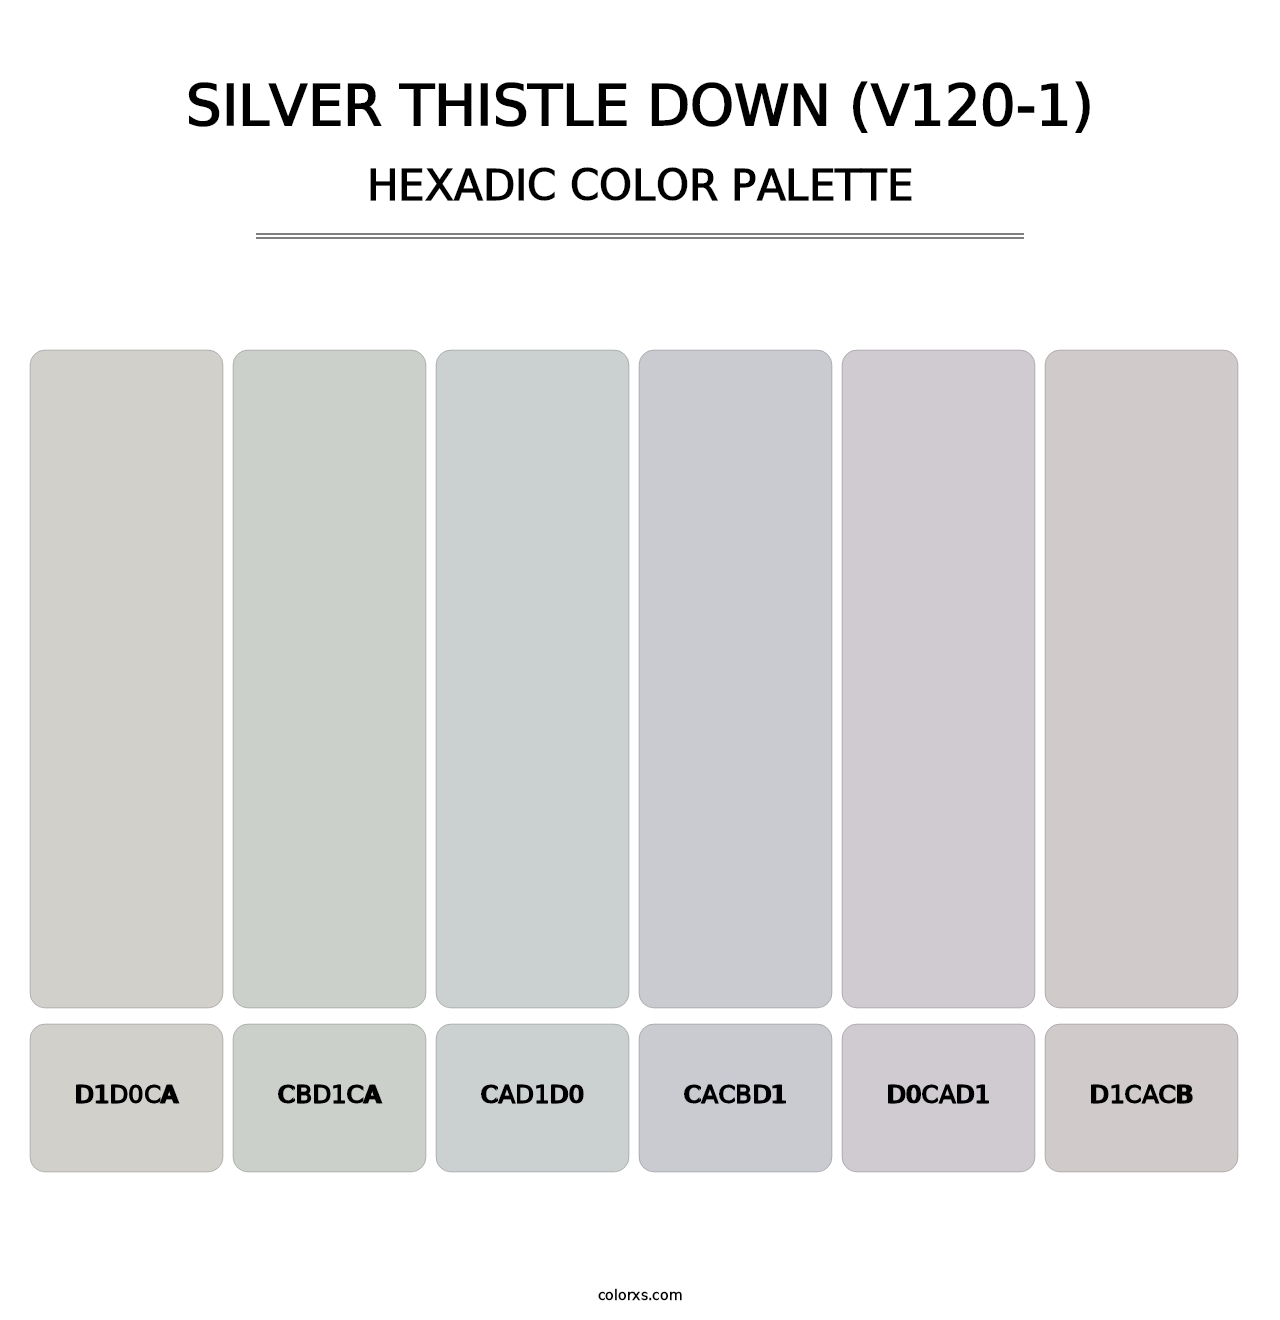 Silver Thistle Down (V120-1) - Hexadic Color Palette